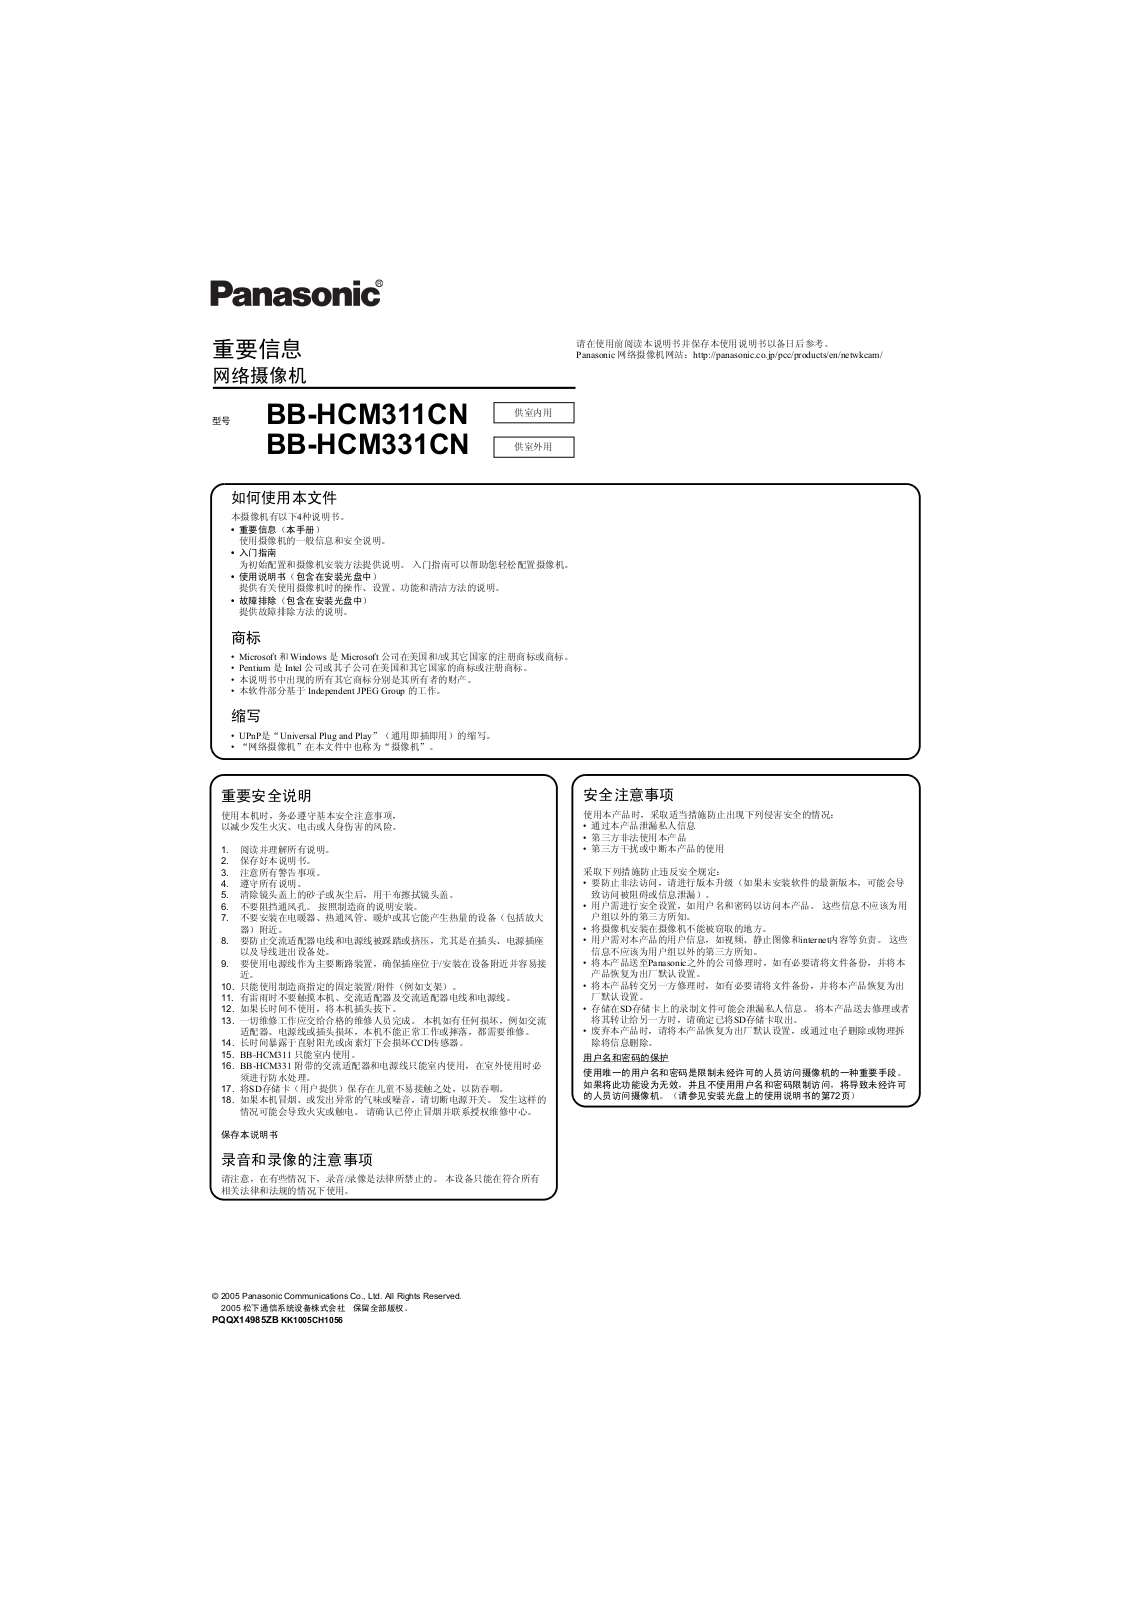 Panasonic BB-HCM311CN, BB-HCM331CN User Manual